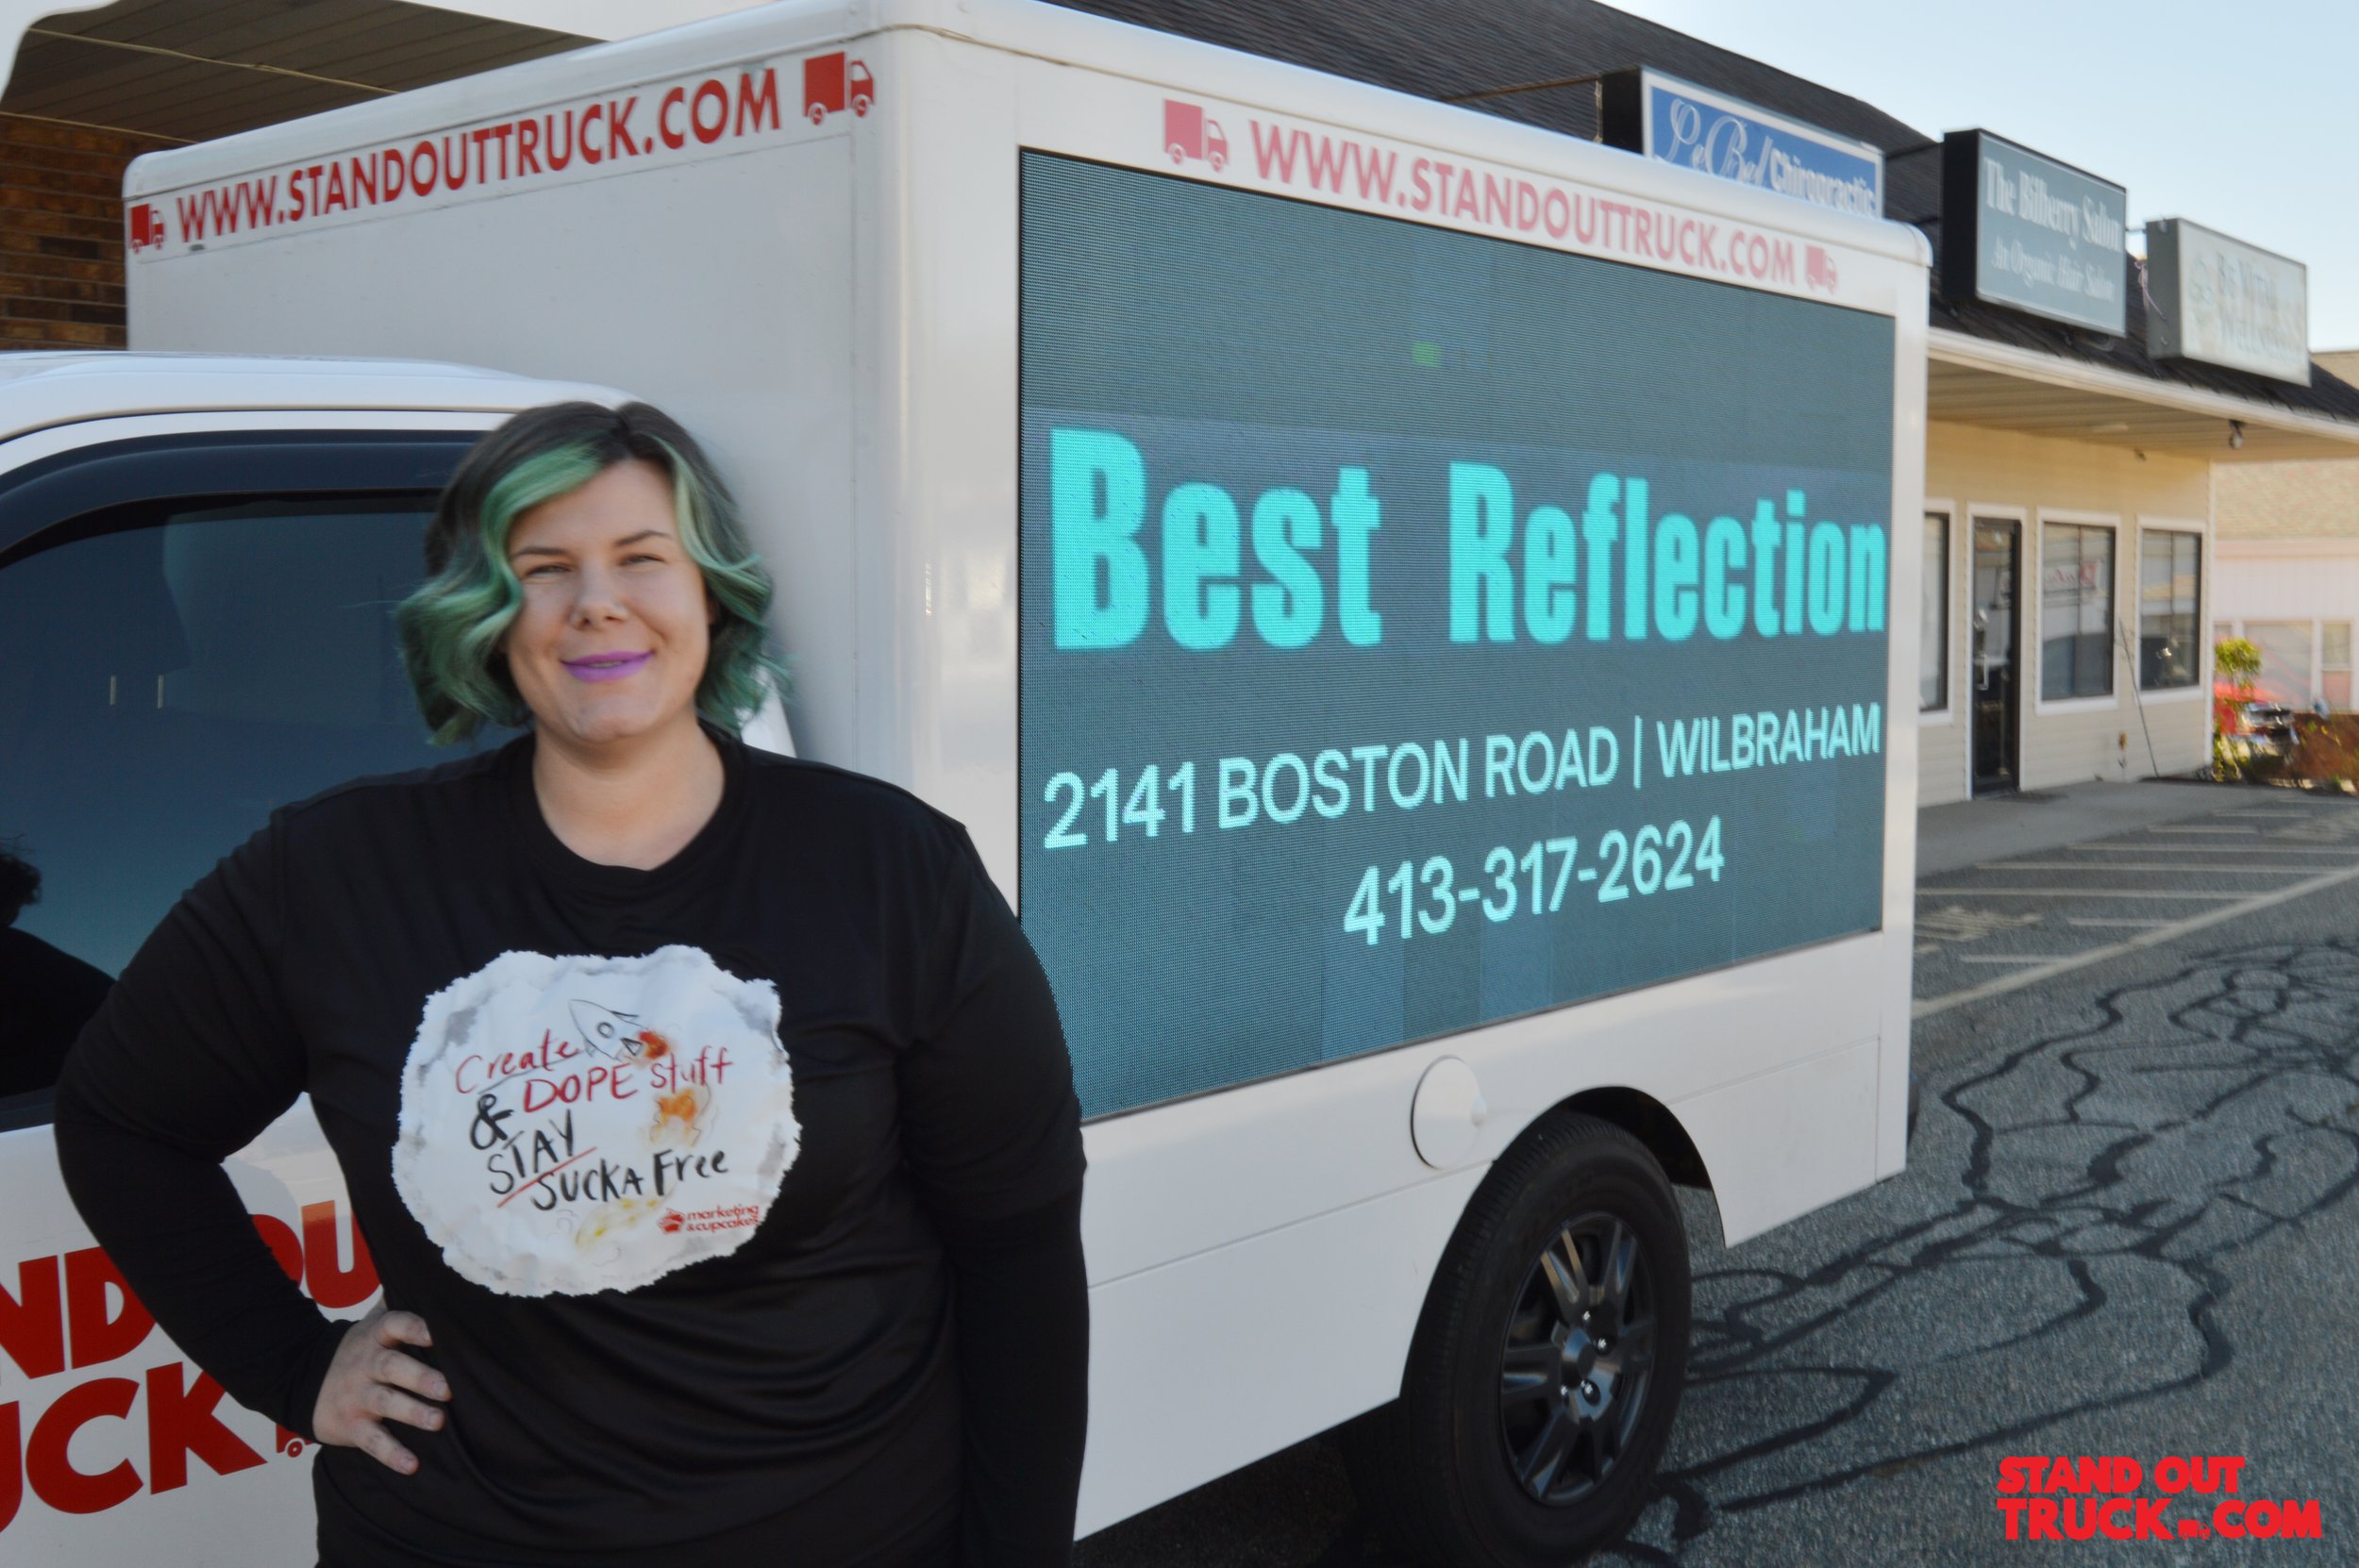 Best Reflection Salon Stand Out Truck 5.JPG